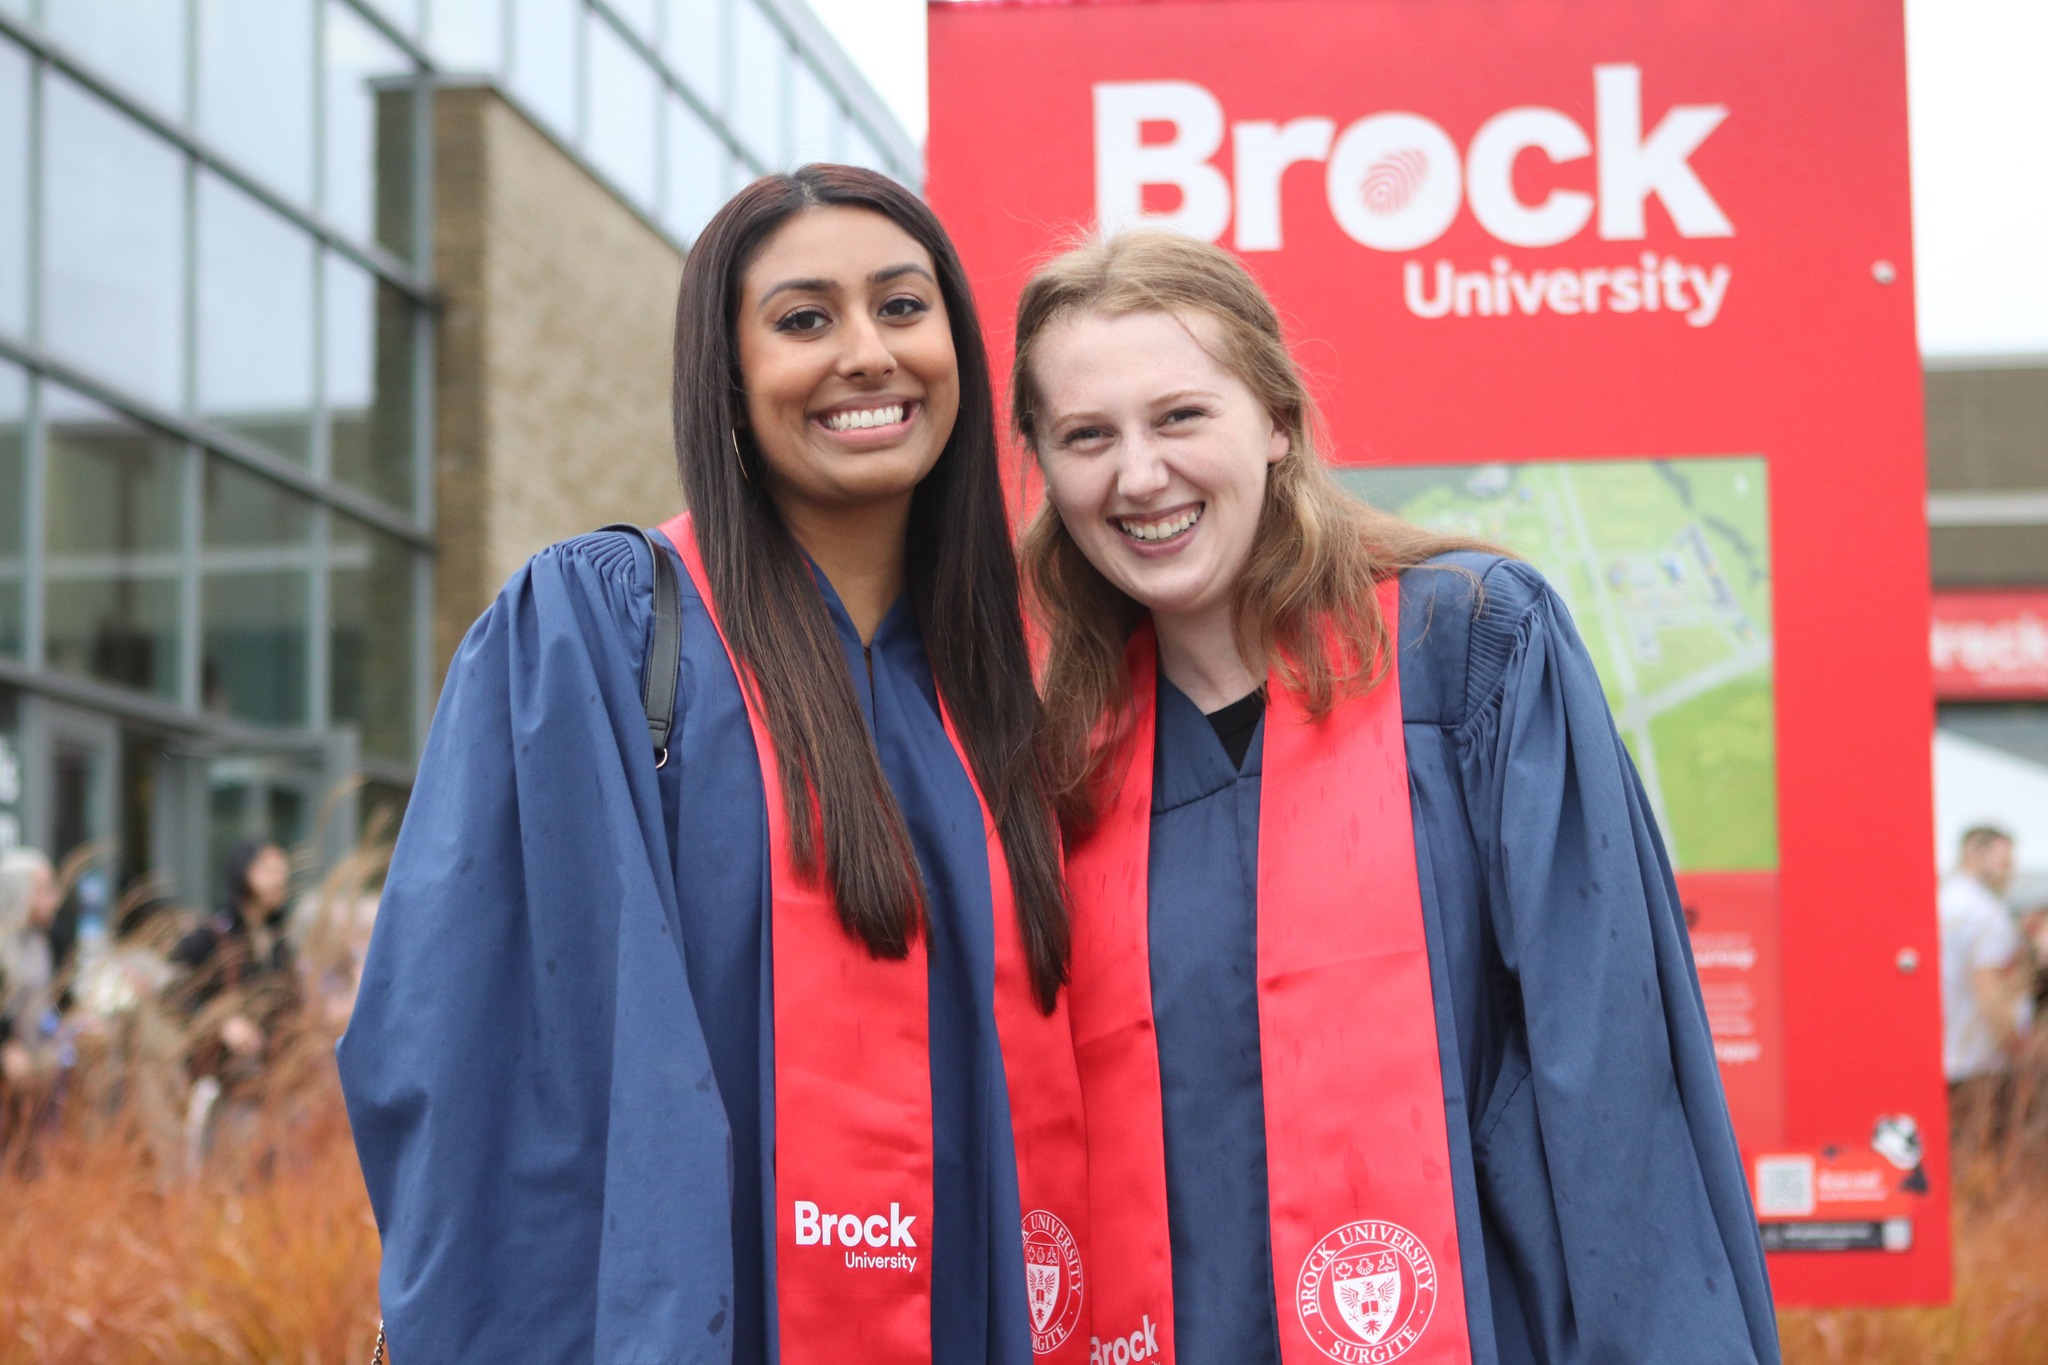 Chinh phục Brock University